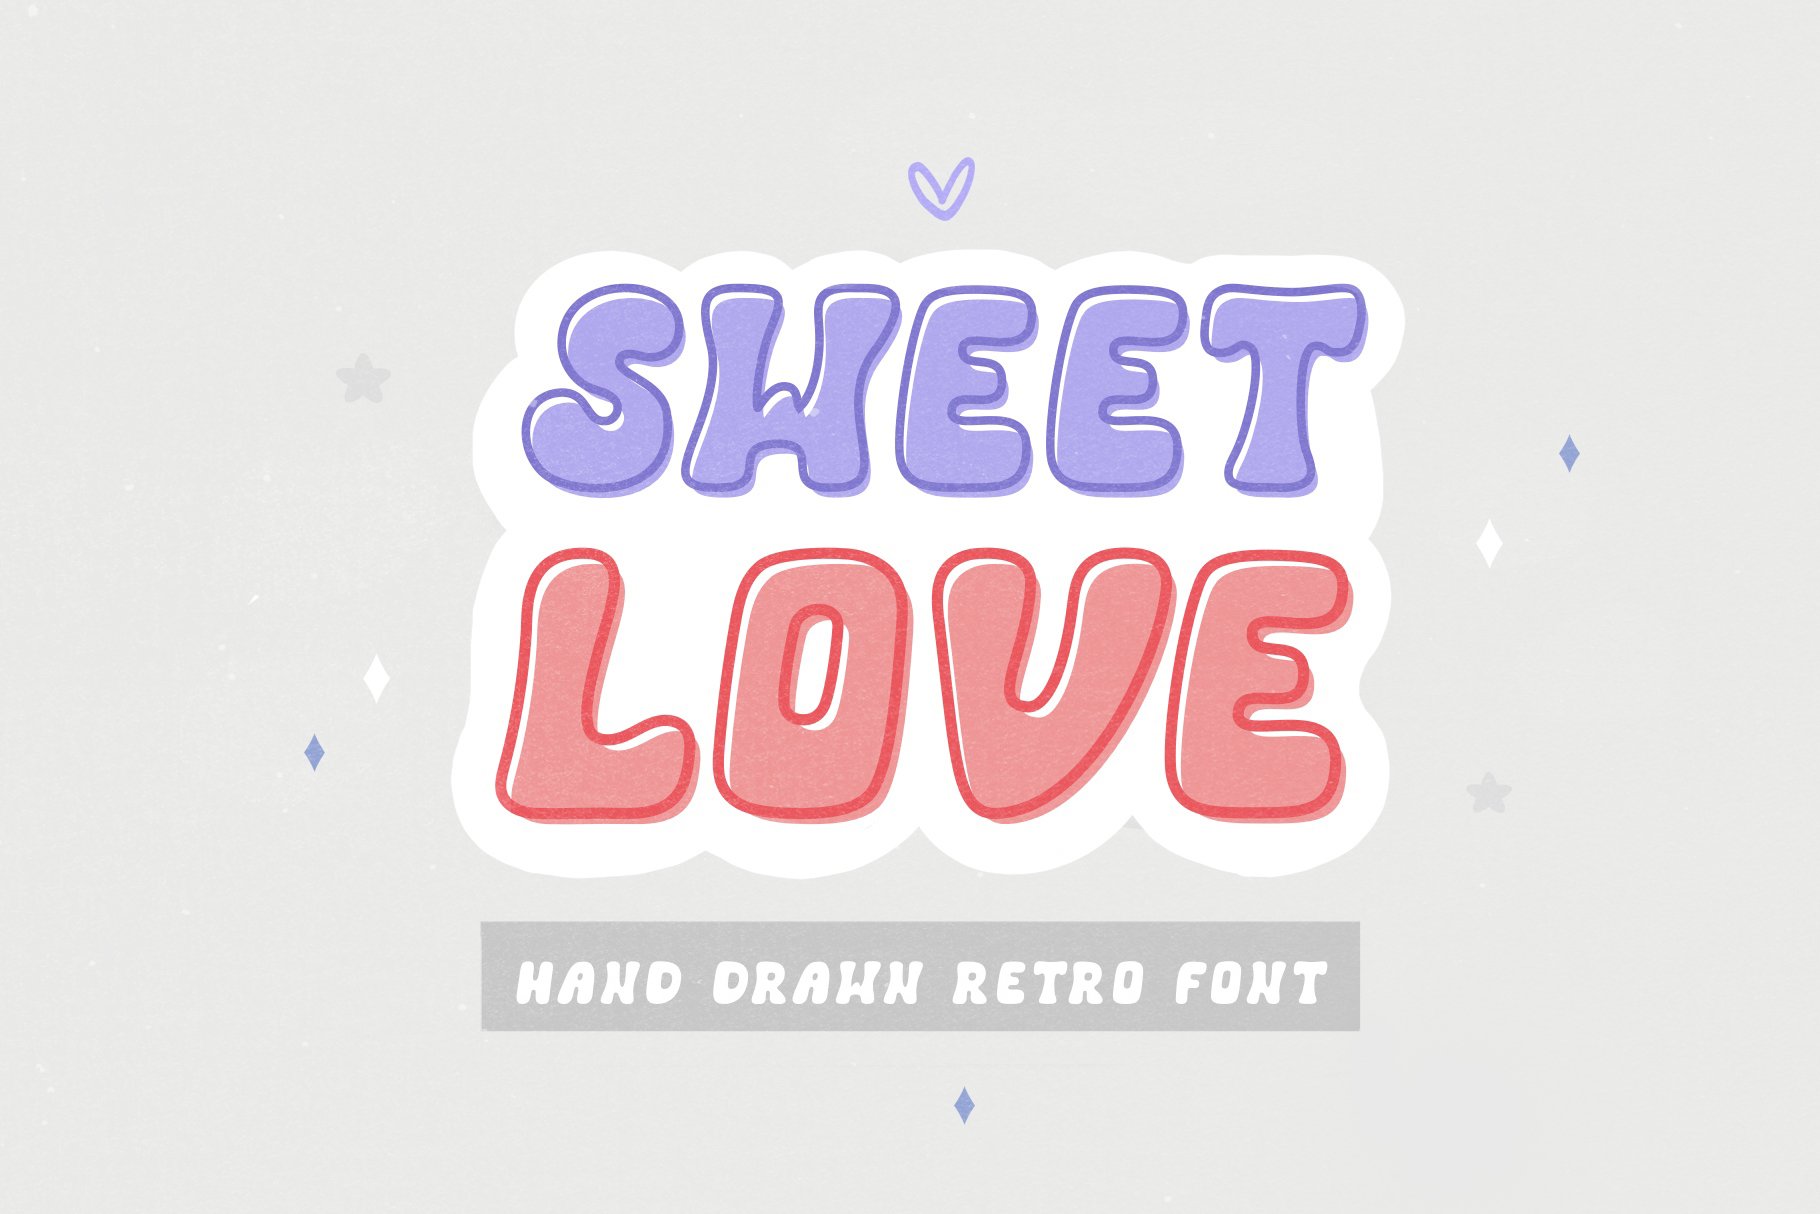 Sweetlove Hand Drawn Retro Font cover image.